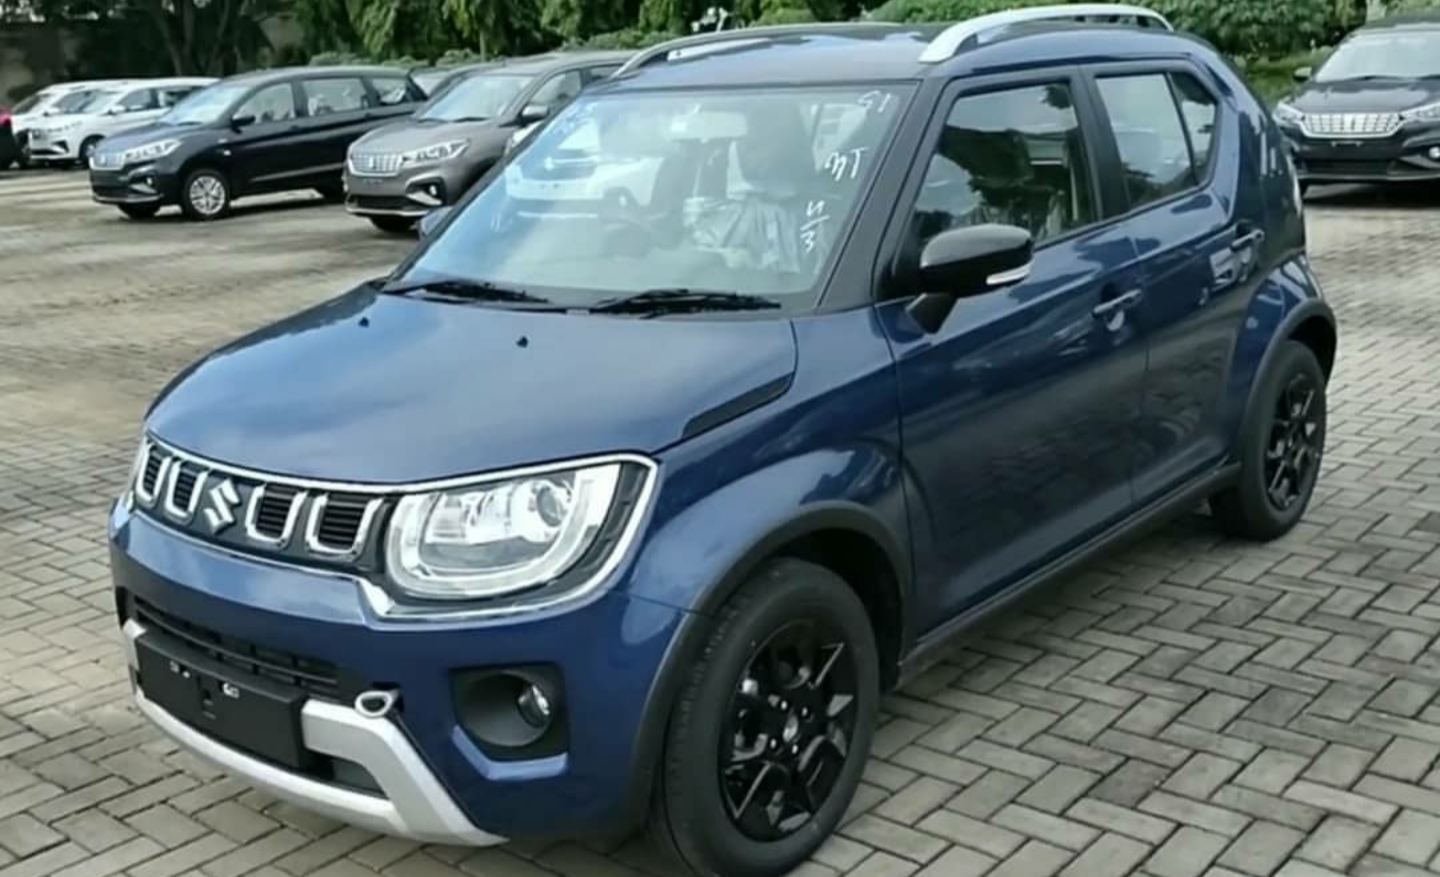 Bocoran Ubahan Suzuki Ignis Facelift versi Indonesia